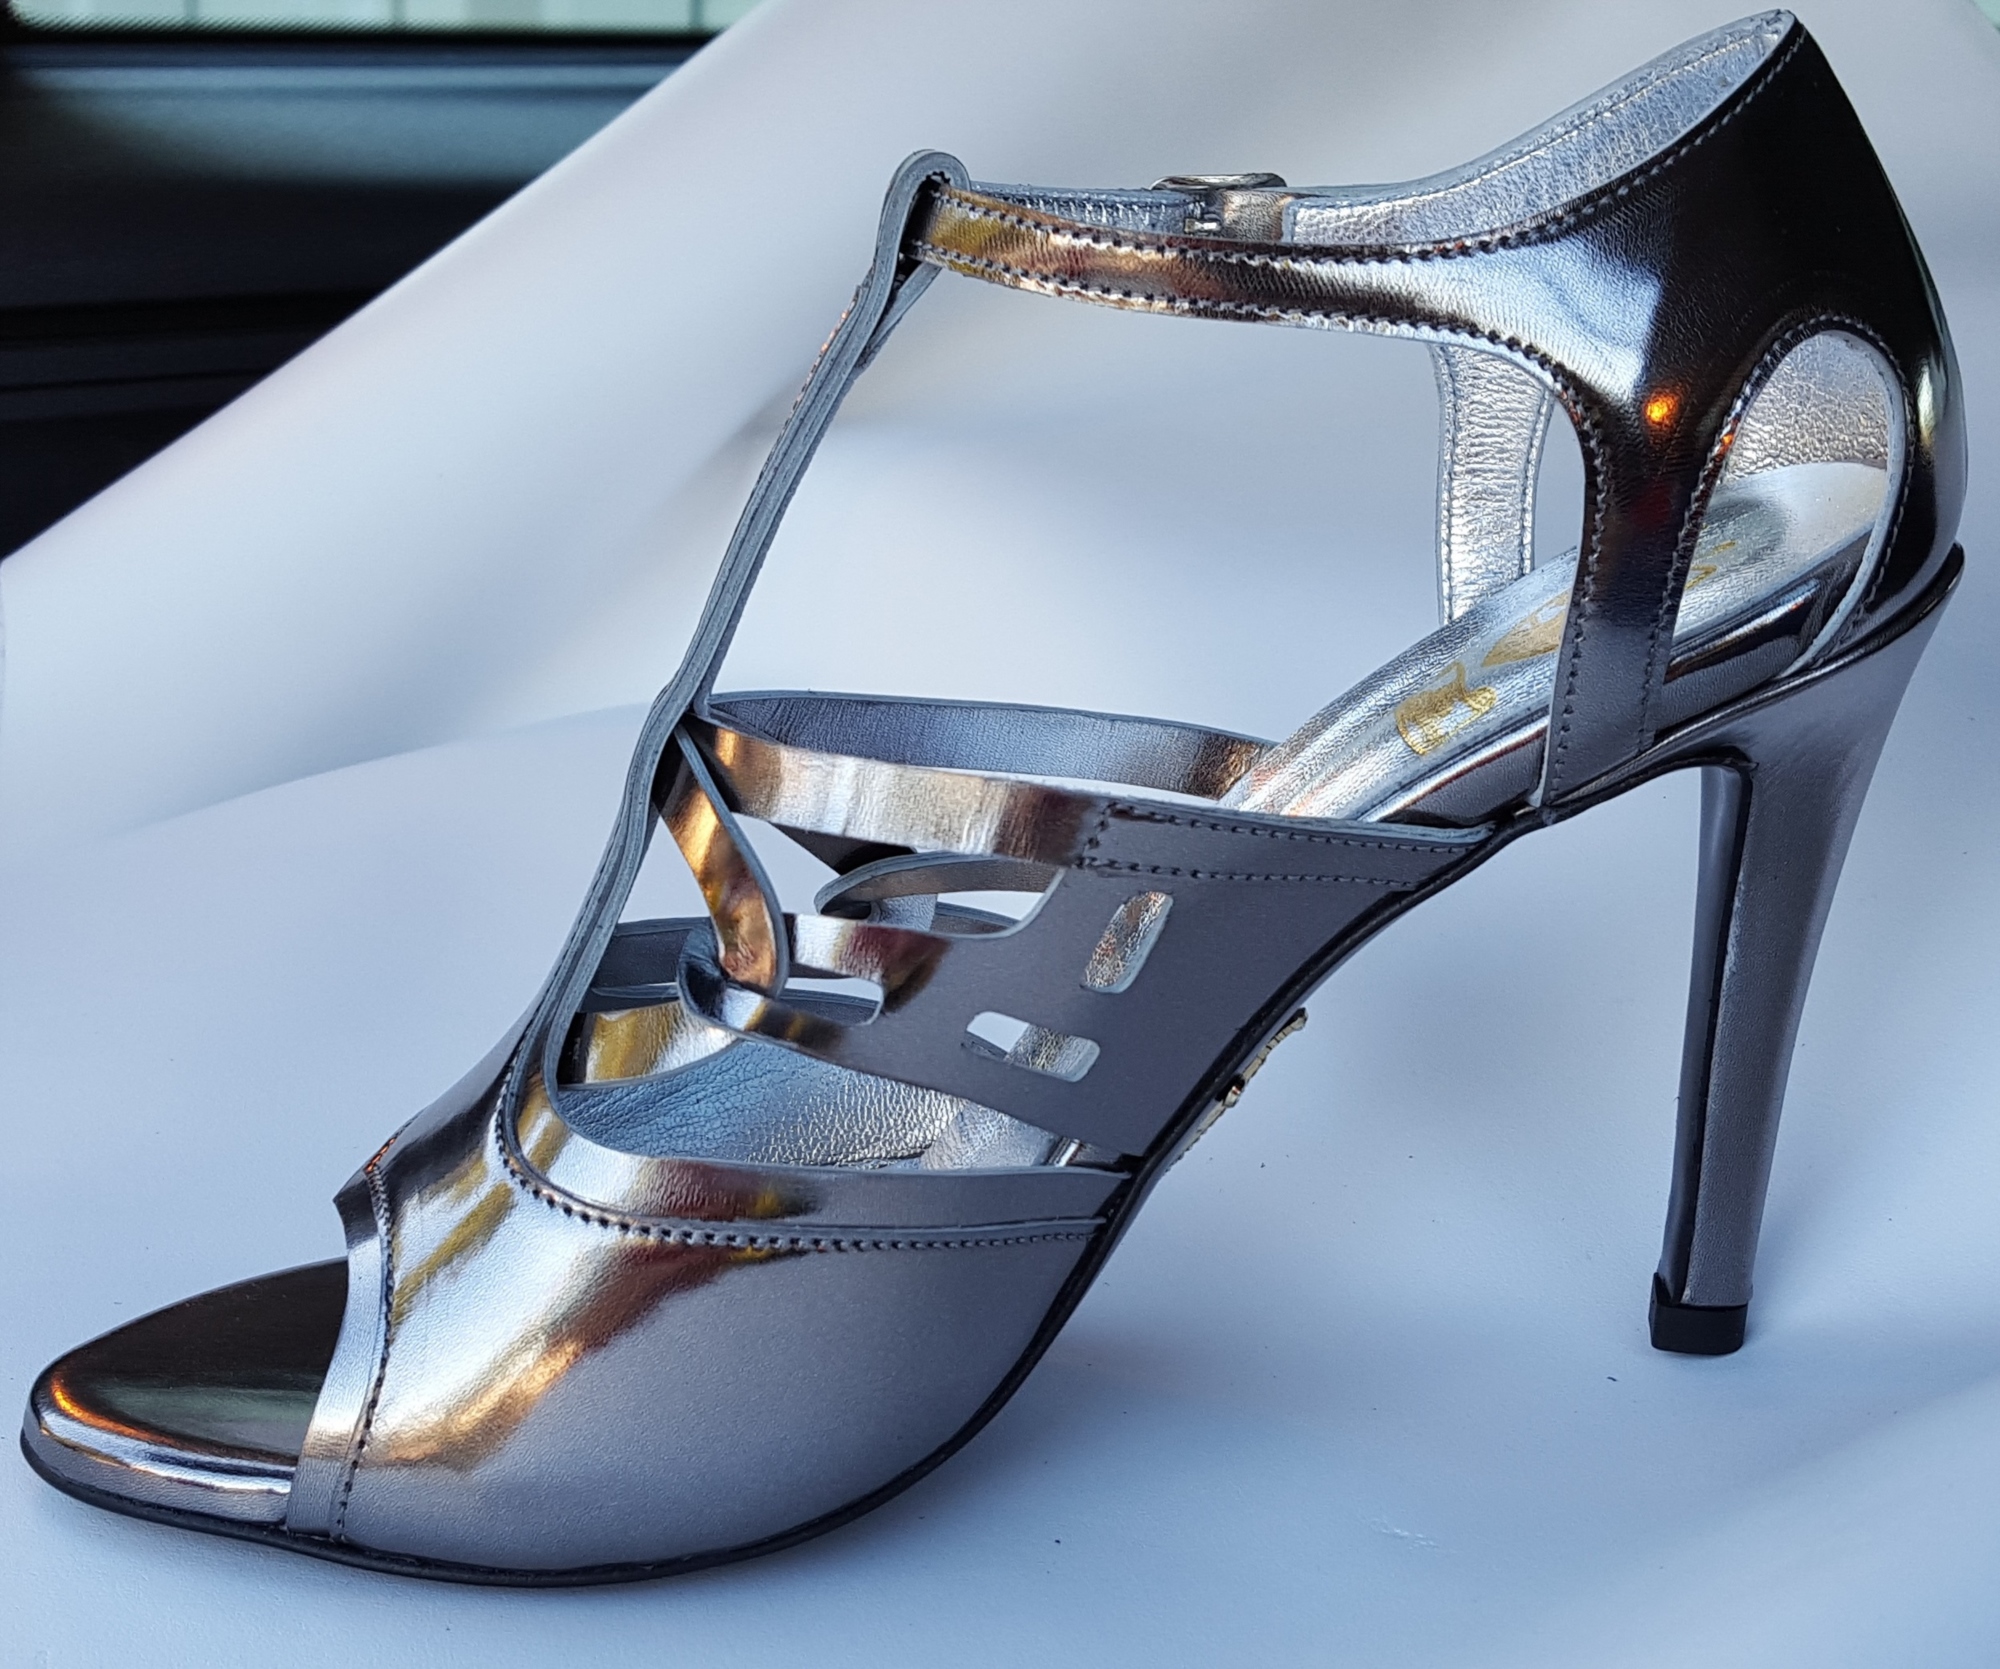 tobia longarini i501 iside handcrafted footwear,  platinum mirror